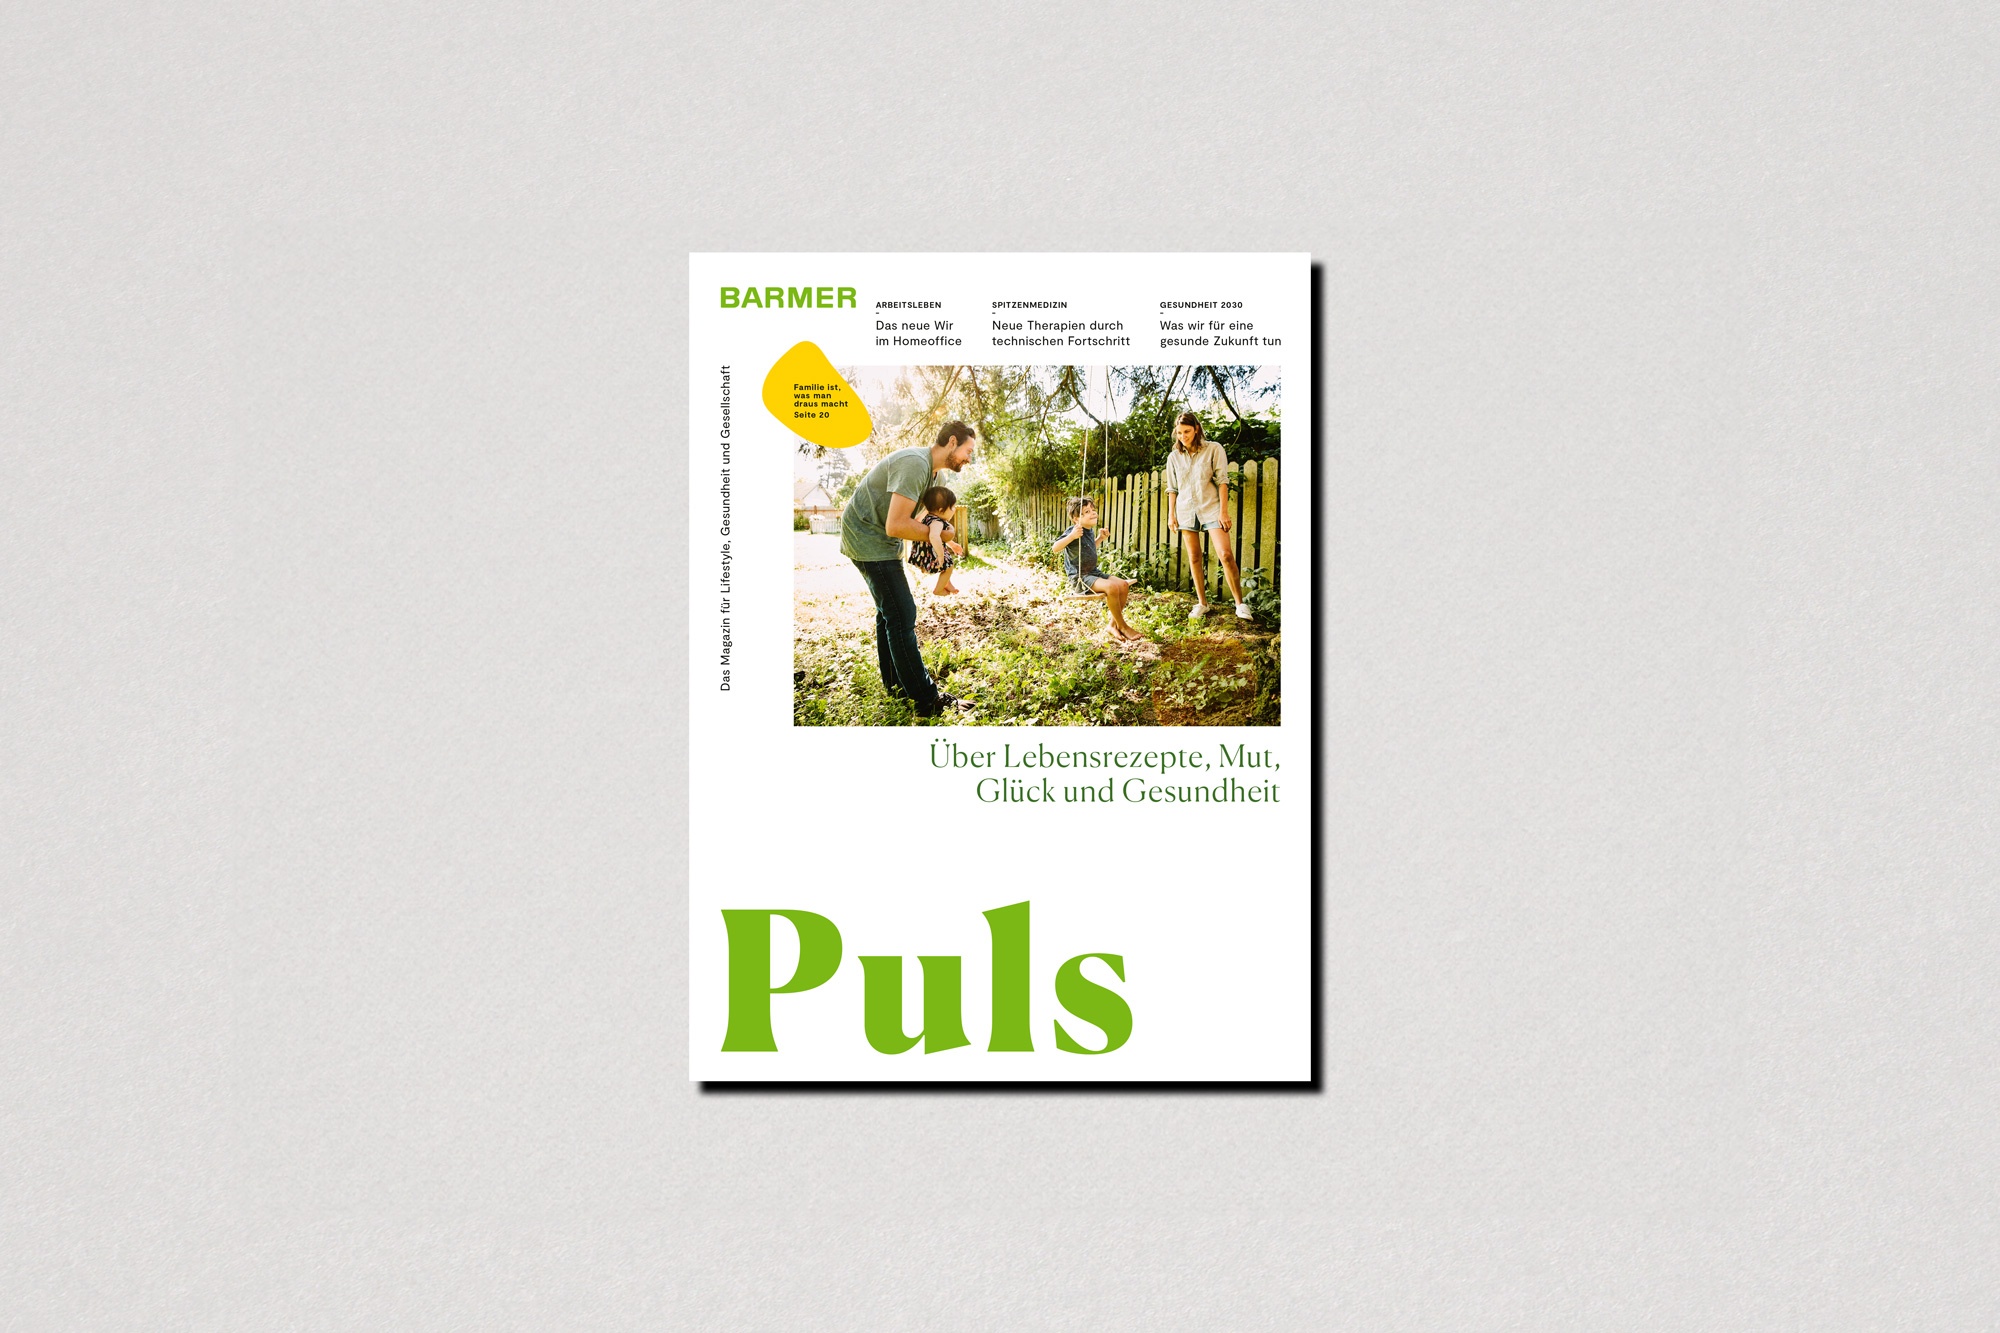 Barmer insurance corporate puls magazine cover